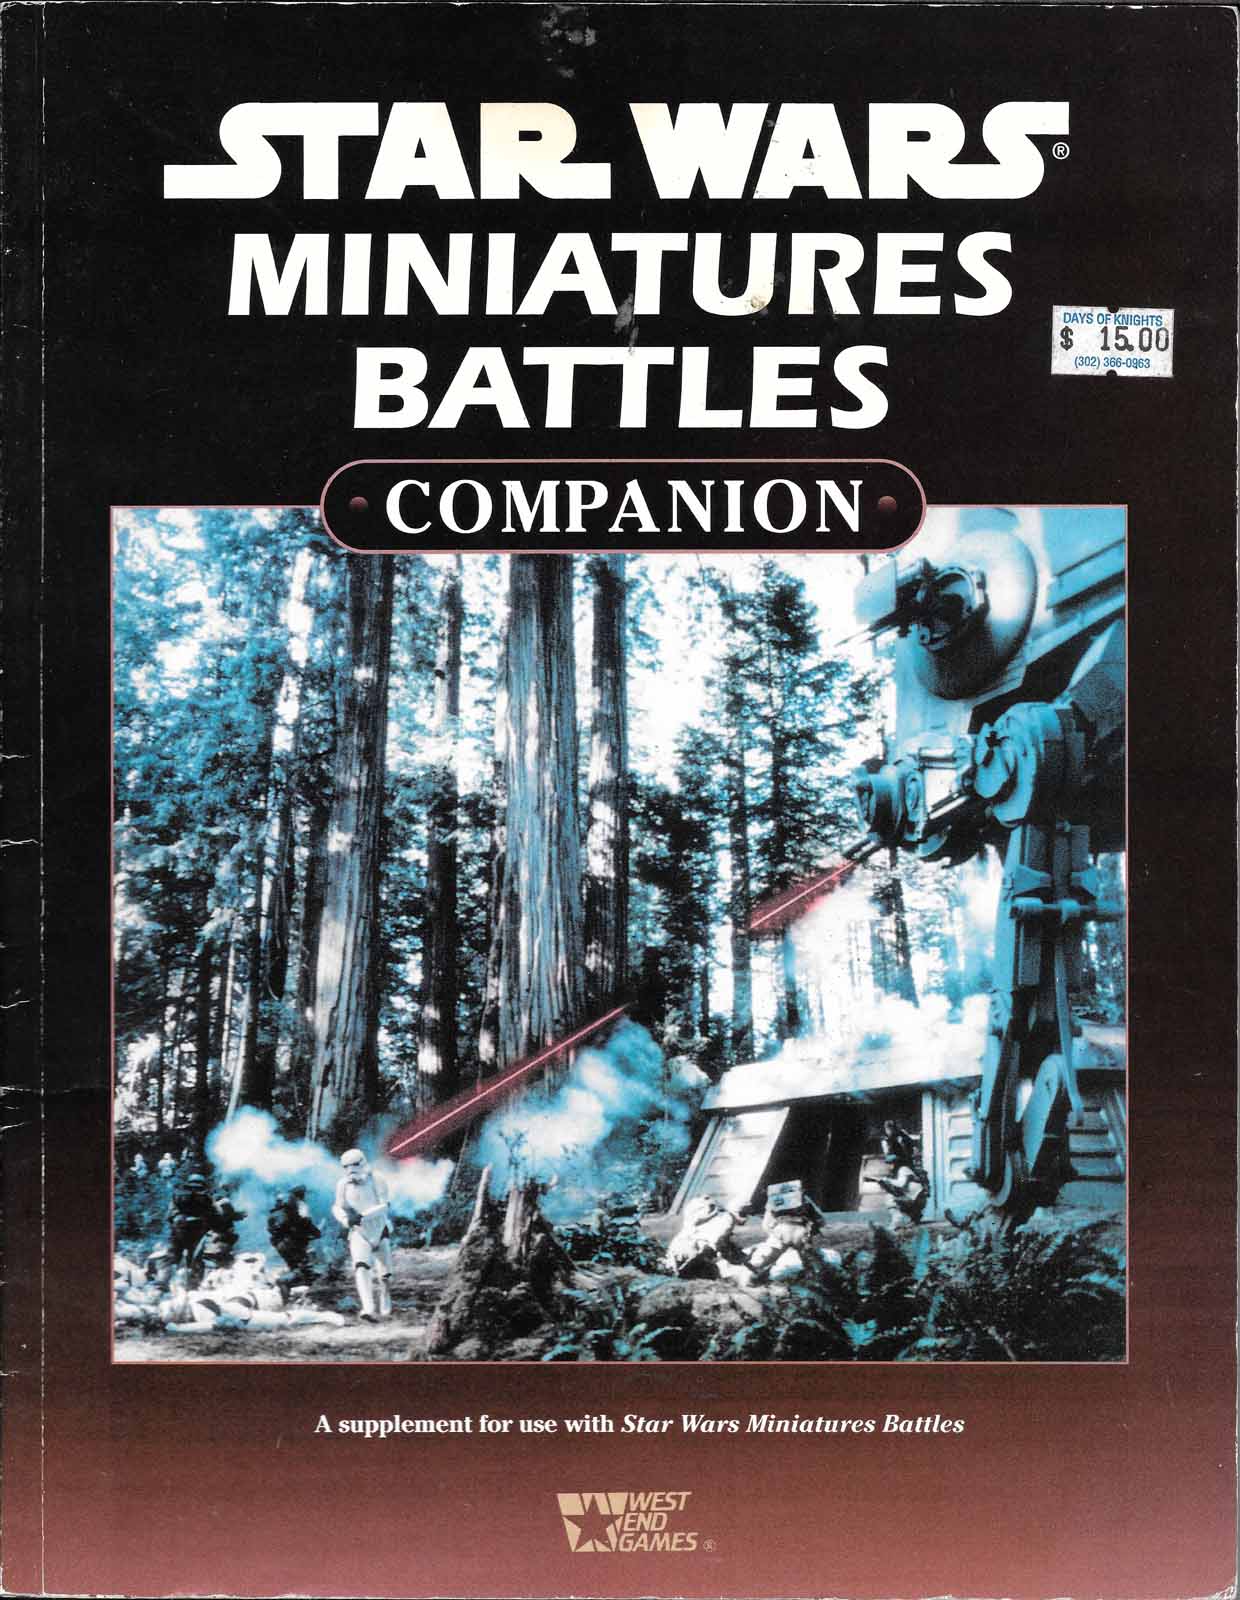 Miniatures Battles Companion